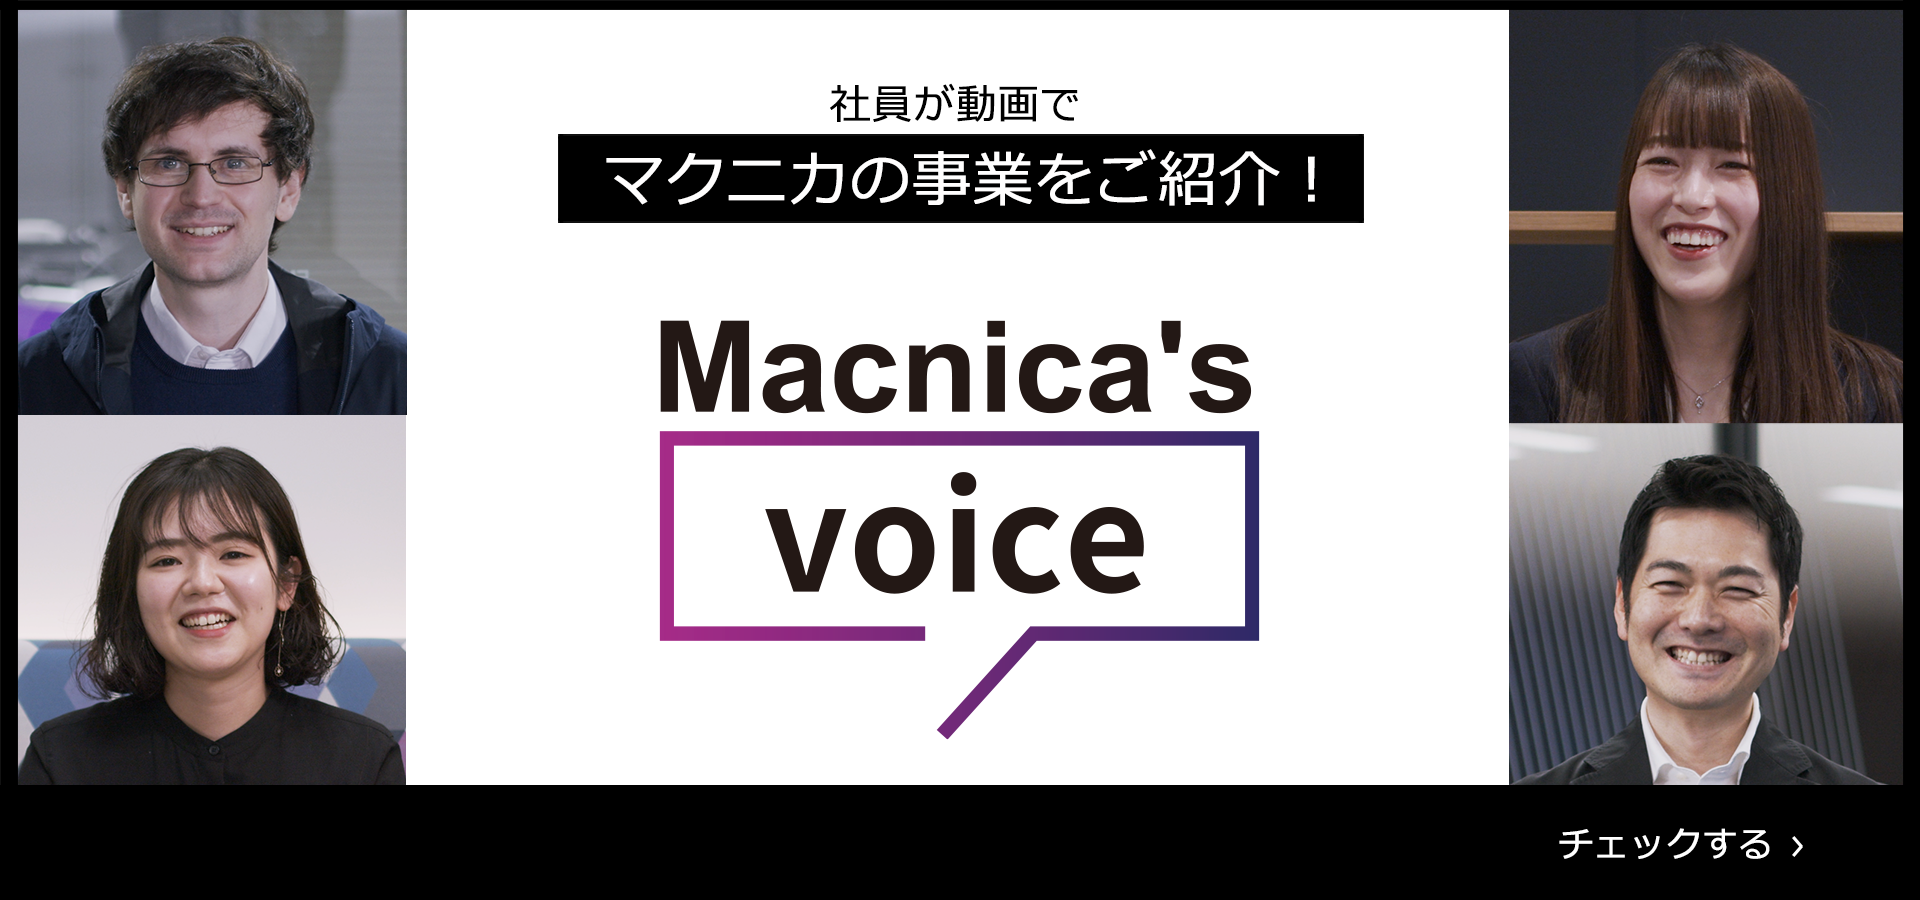 Macnica's Voice